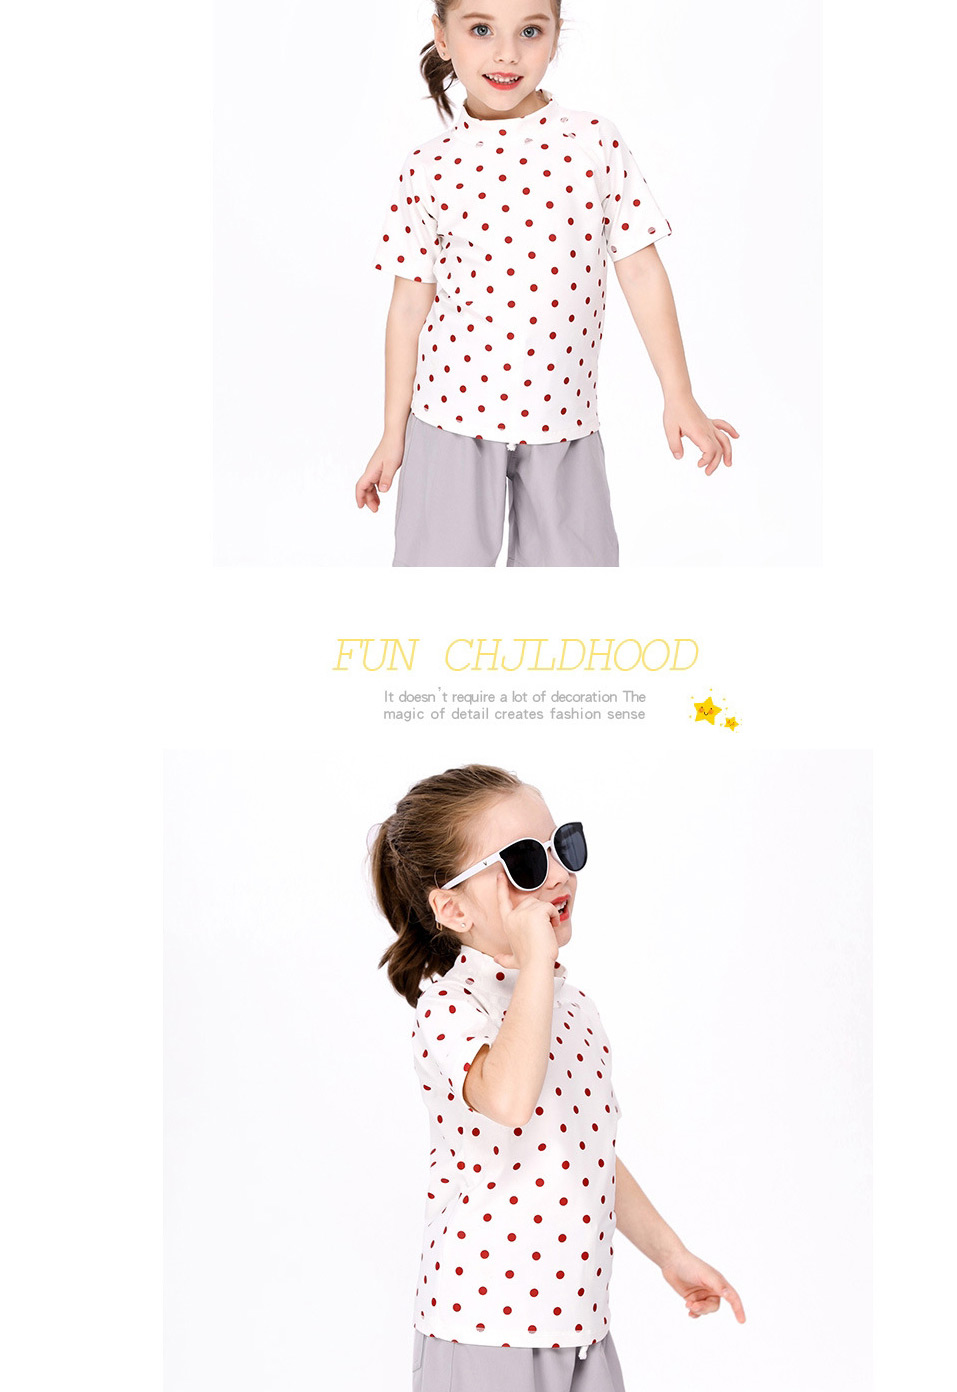 Fashion Flowers Childrens Short-sleeved Top Swimsuit,Kids Swimwear